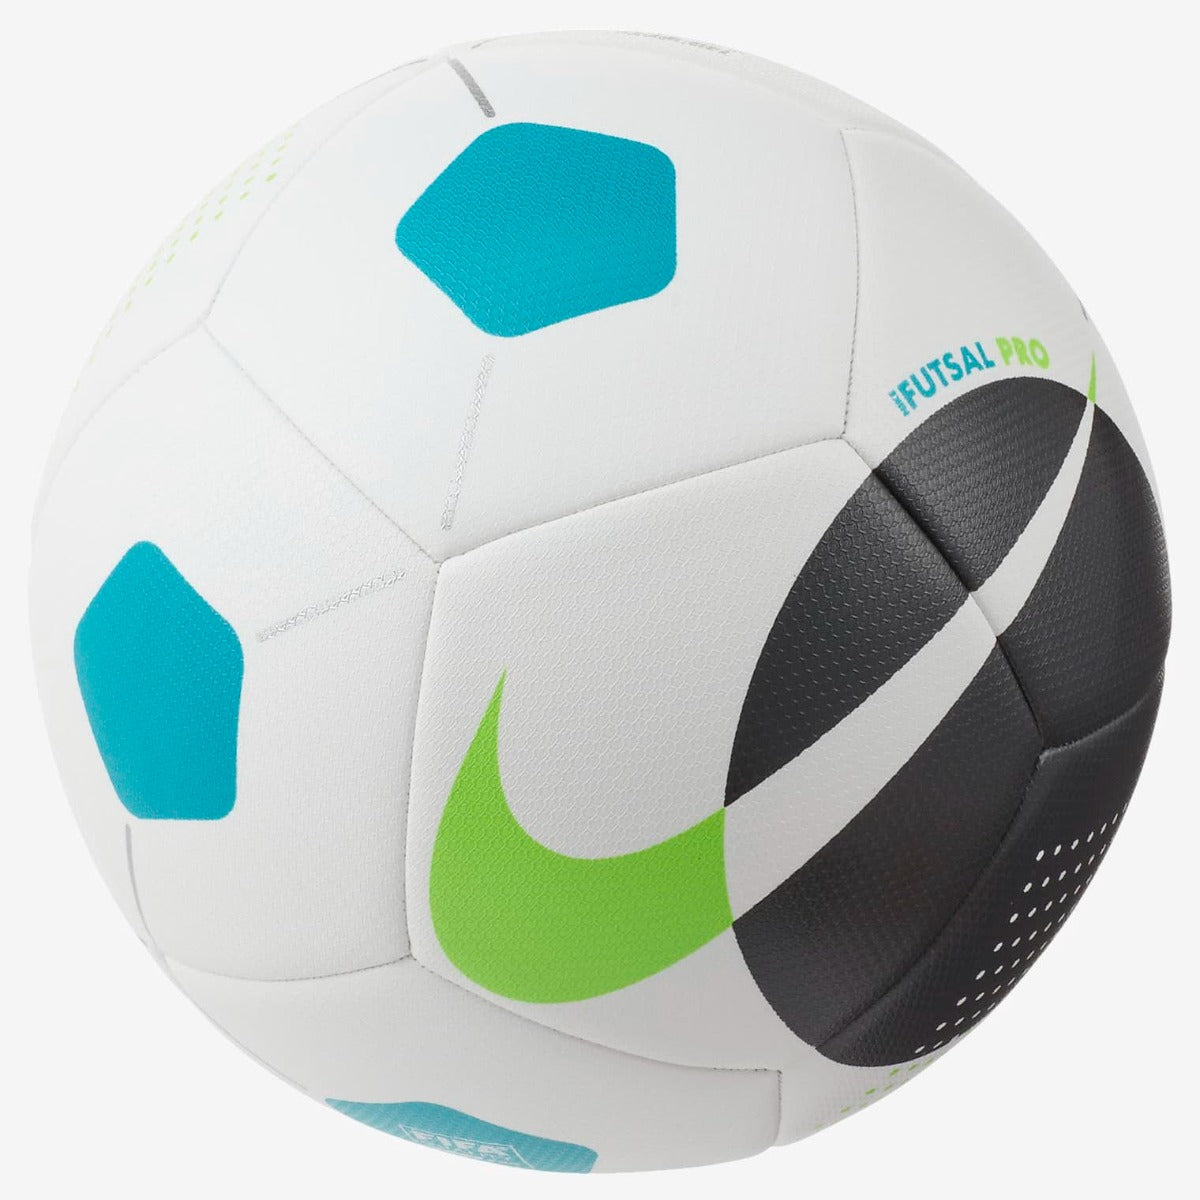 Nike Futsal PRO Ball - White-Teal-Black (Front)